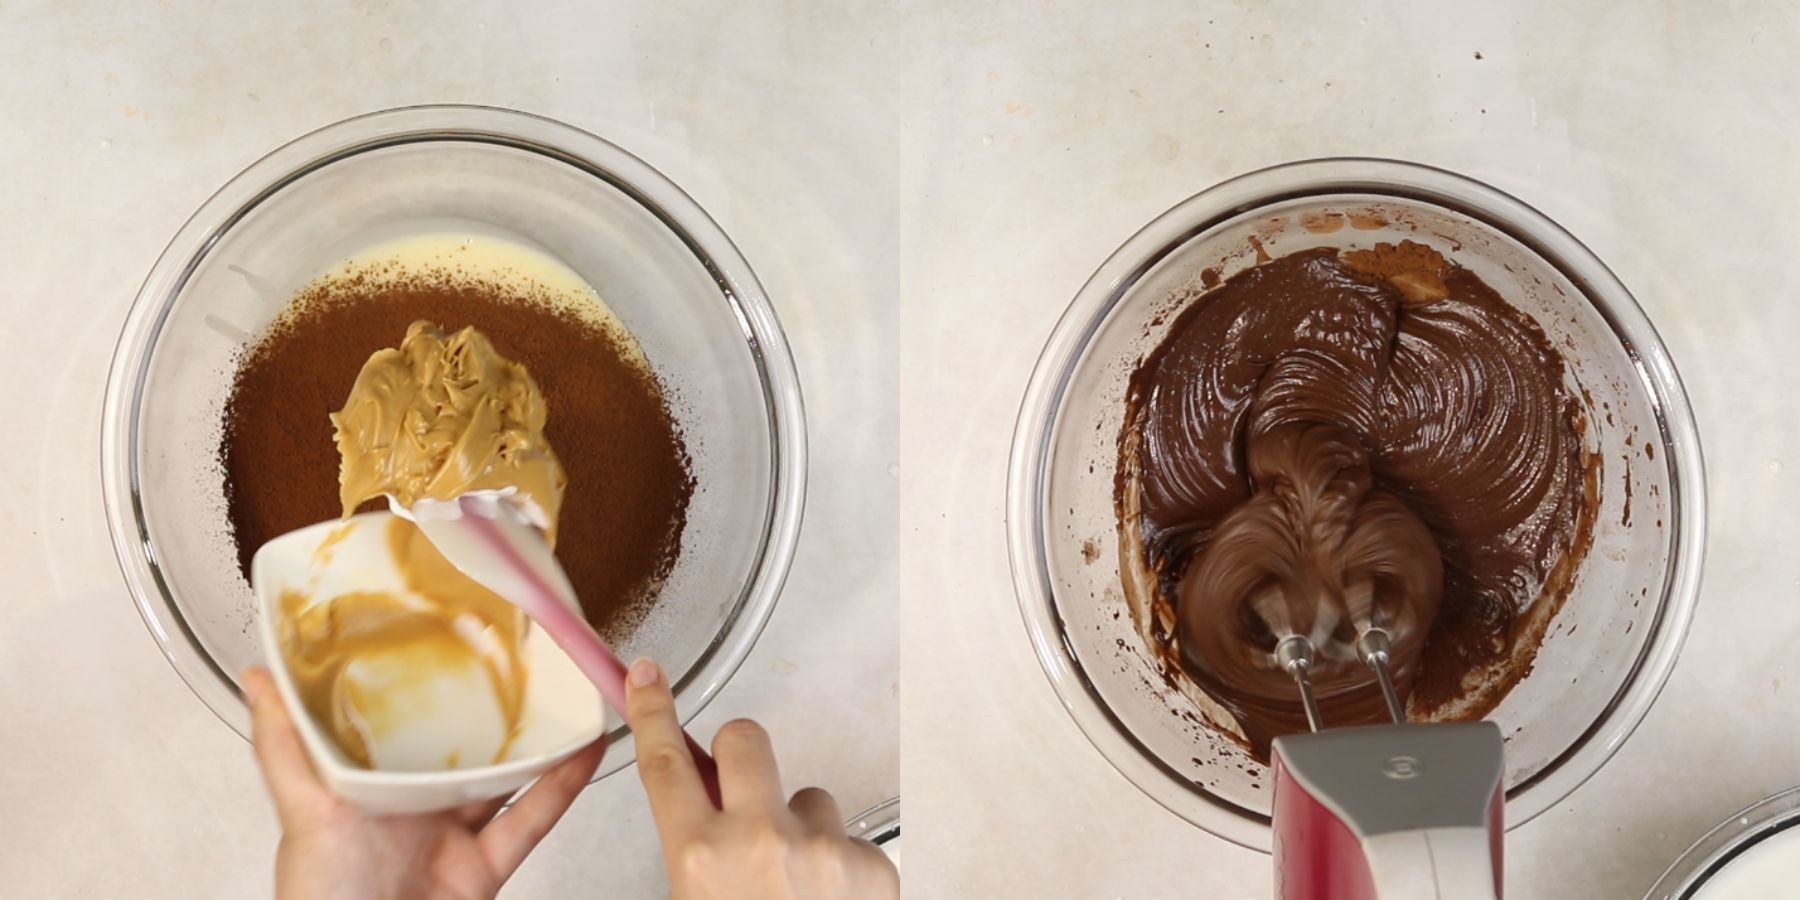 Ice cream process shots.